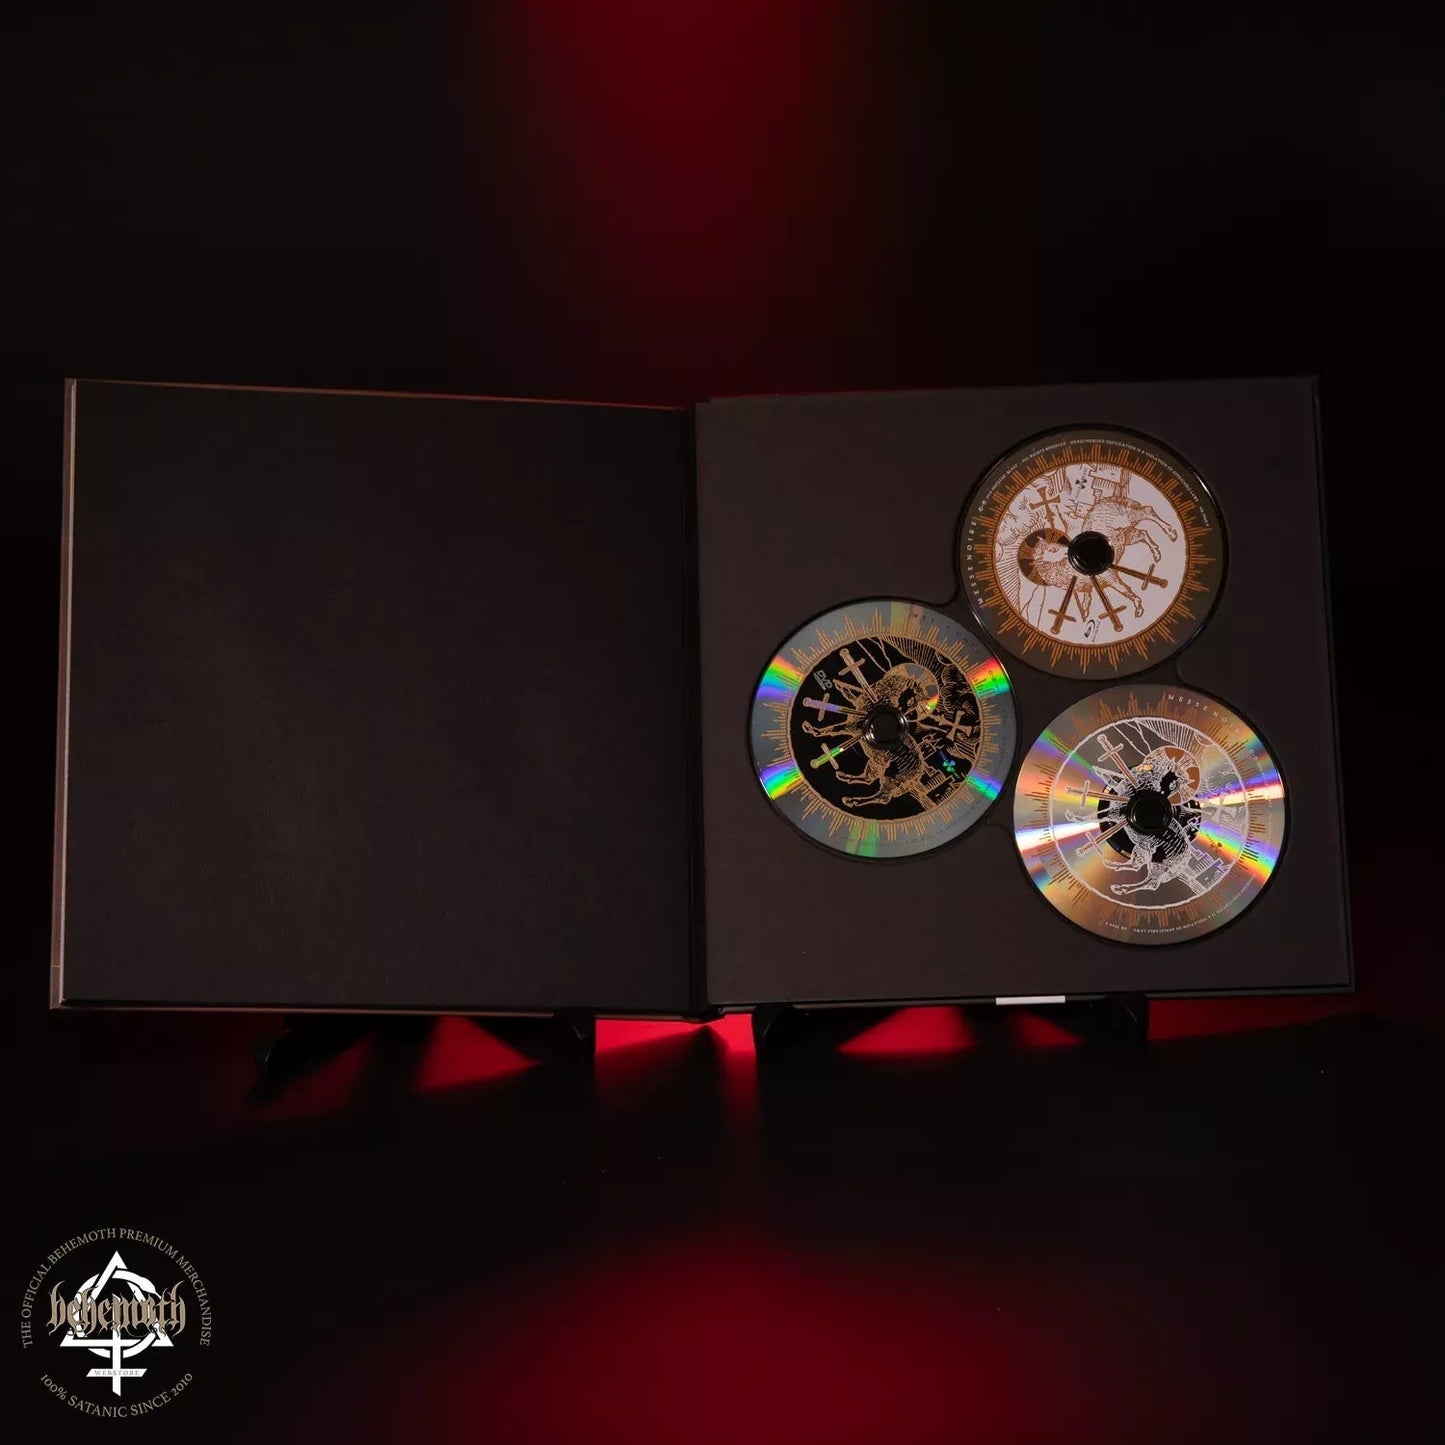 BEHEMOTH - Messe Noire Earbook CD/DVD/BluRay signed